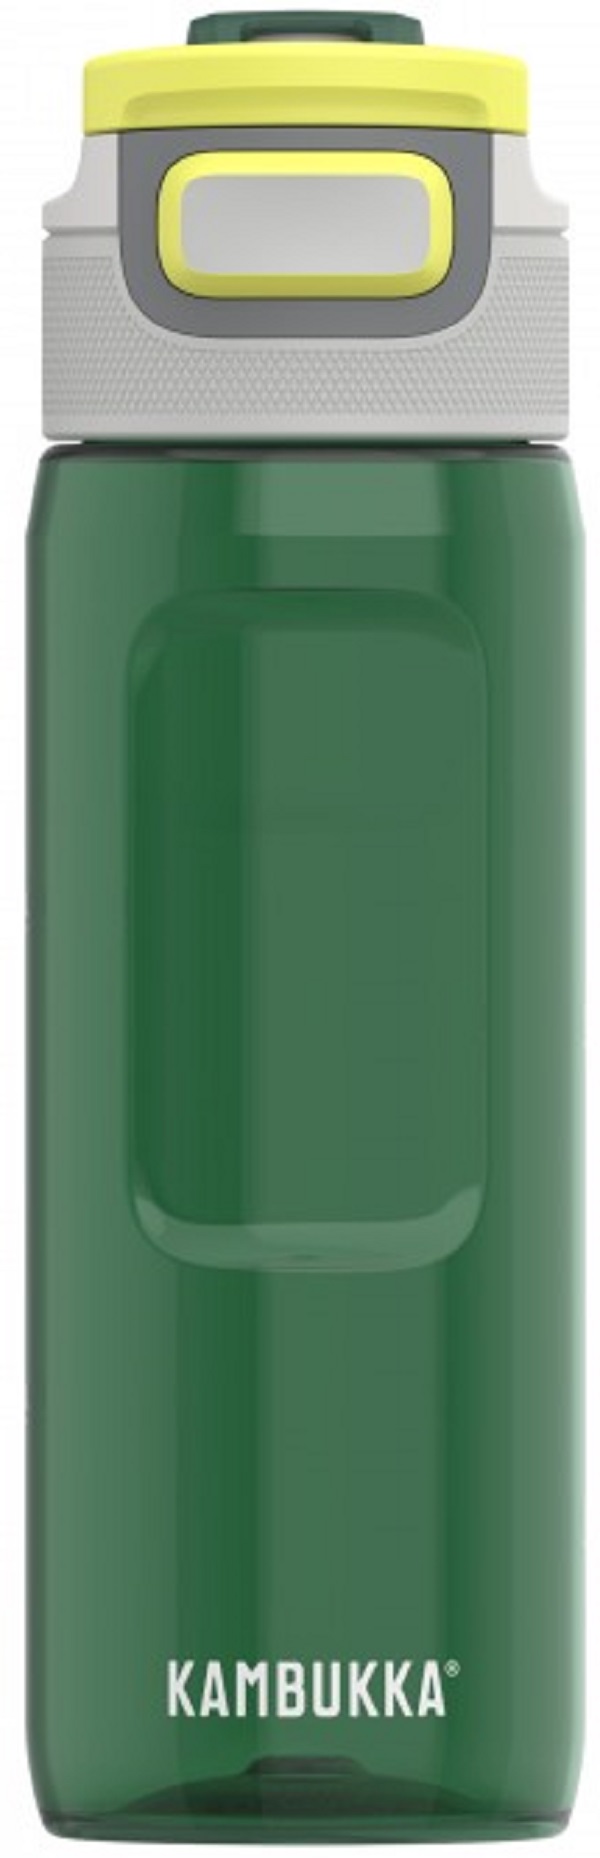 Sticla pentru apa: Olive Green